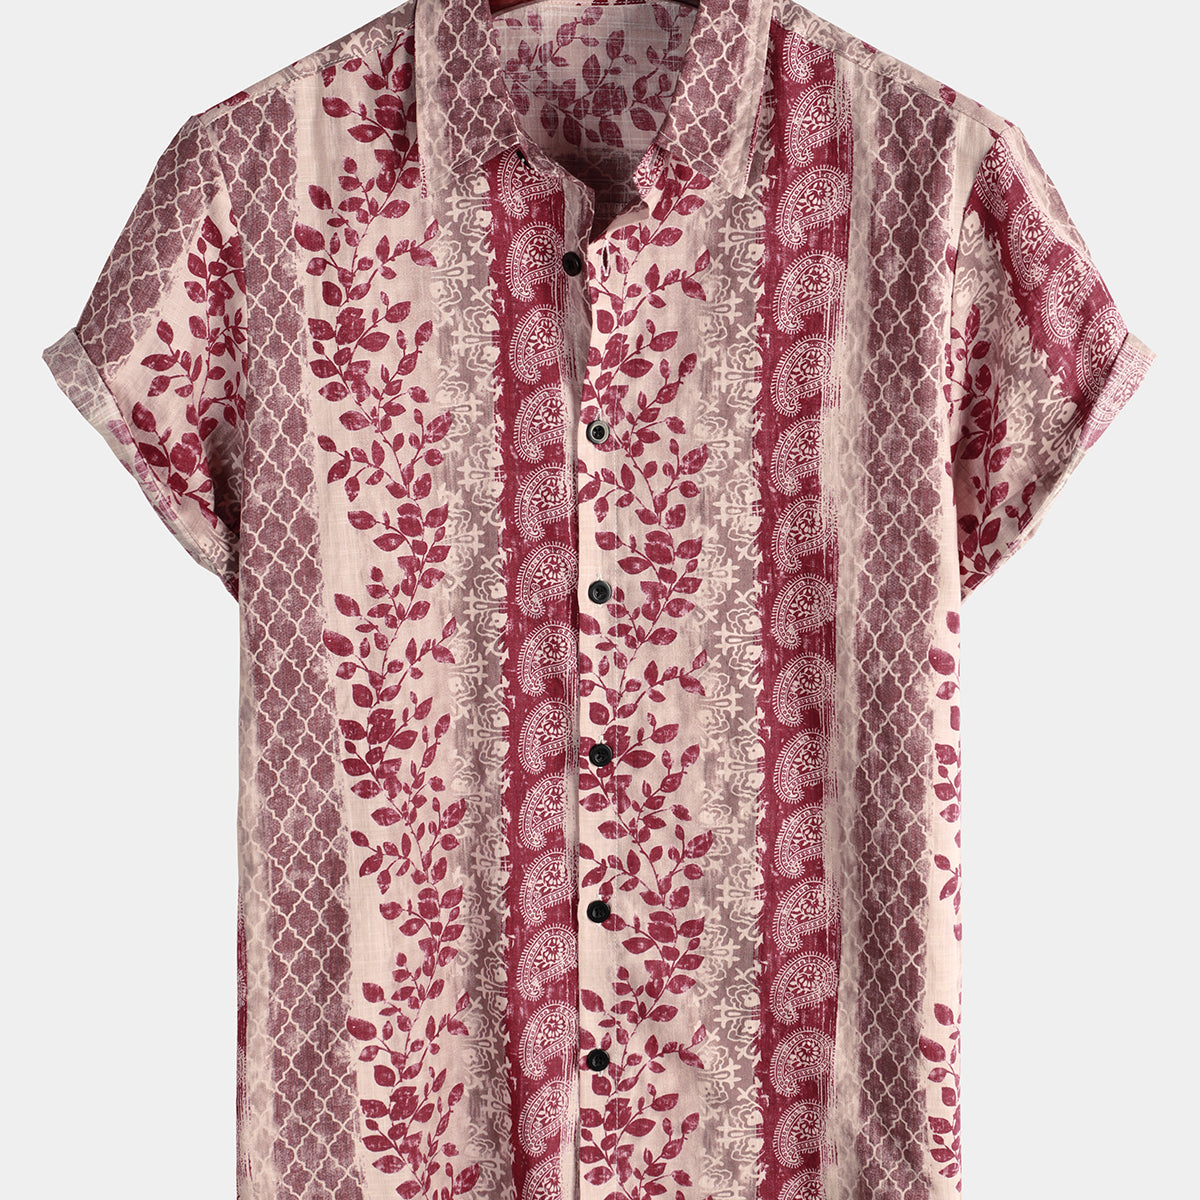 Men's Vintage Floral Paisley Striped Button Up Pink Short Sleeve Shirt